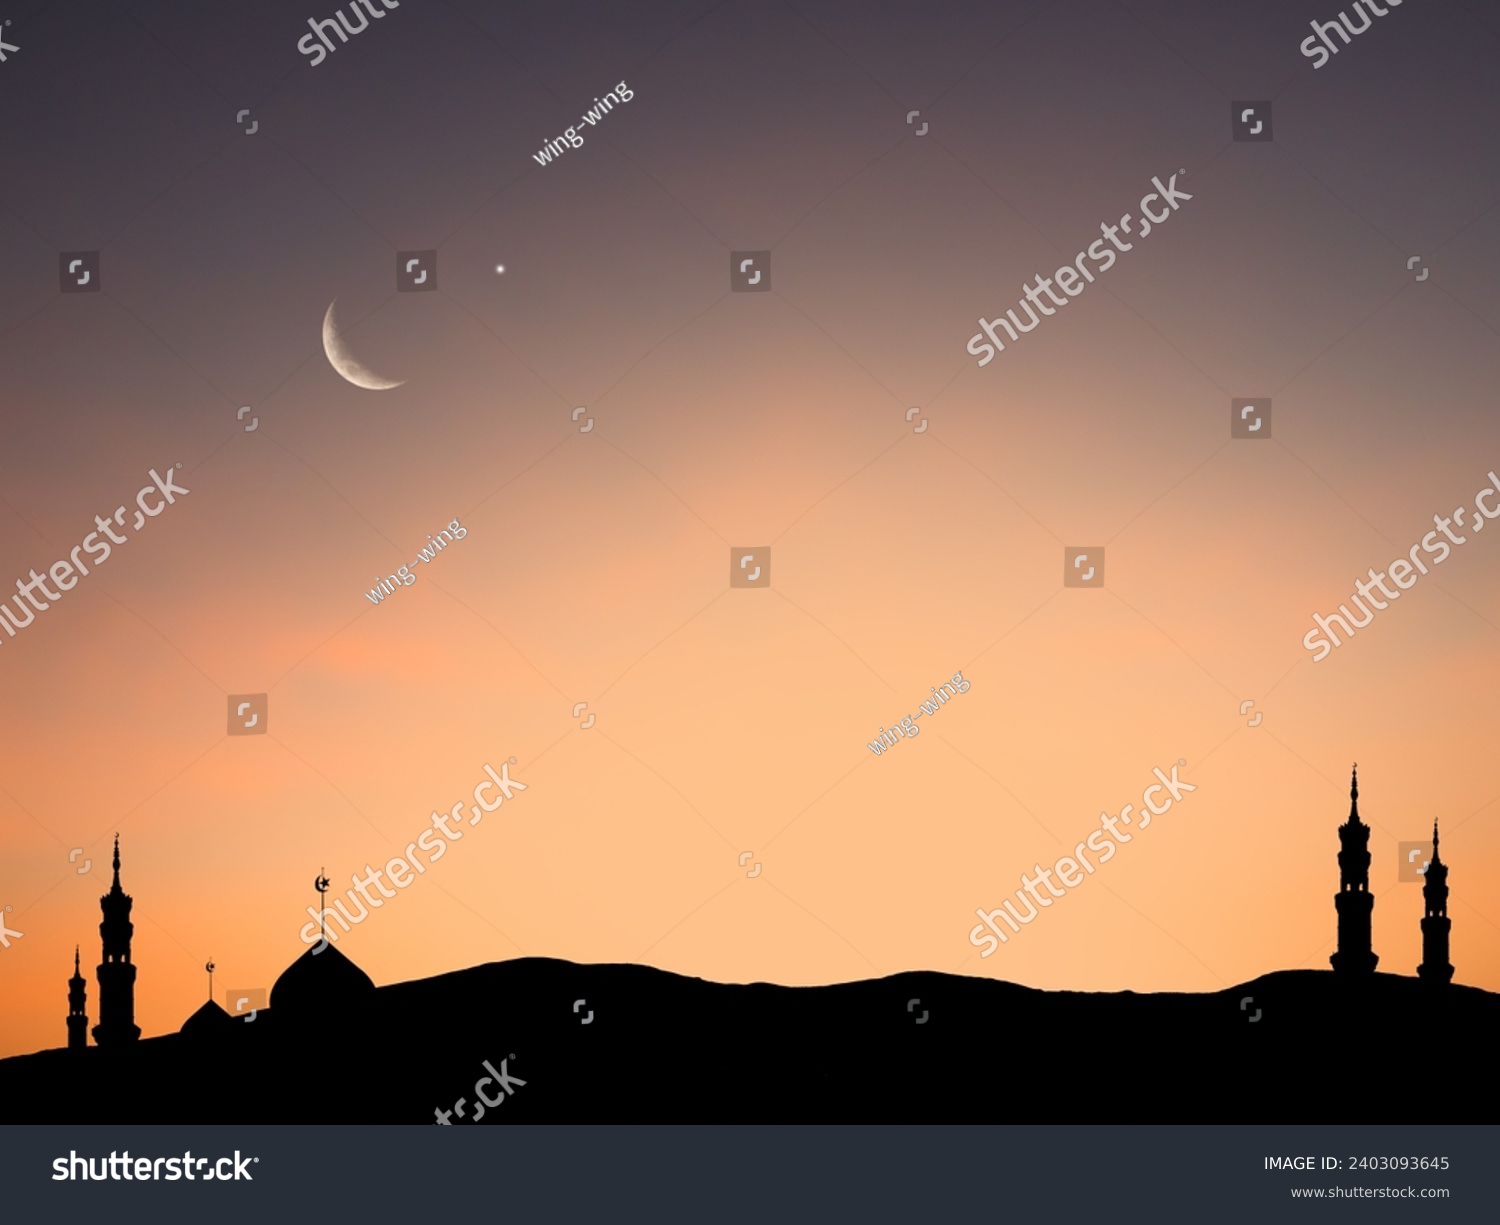 Greeting Miraj Musque Dome Night Building with Sky Moon Sunset Background Mubaruk Greeting Islam Ramadan Element Masjid Aqsa Hajj Kaaba Umrah Eid Arabian Religion Islamic Muhammad Arab Muslim #2403093645